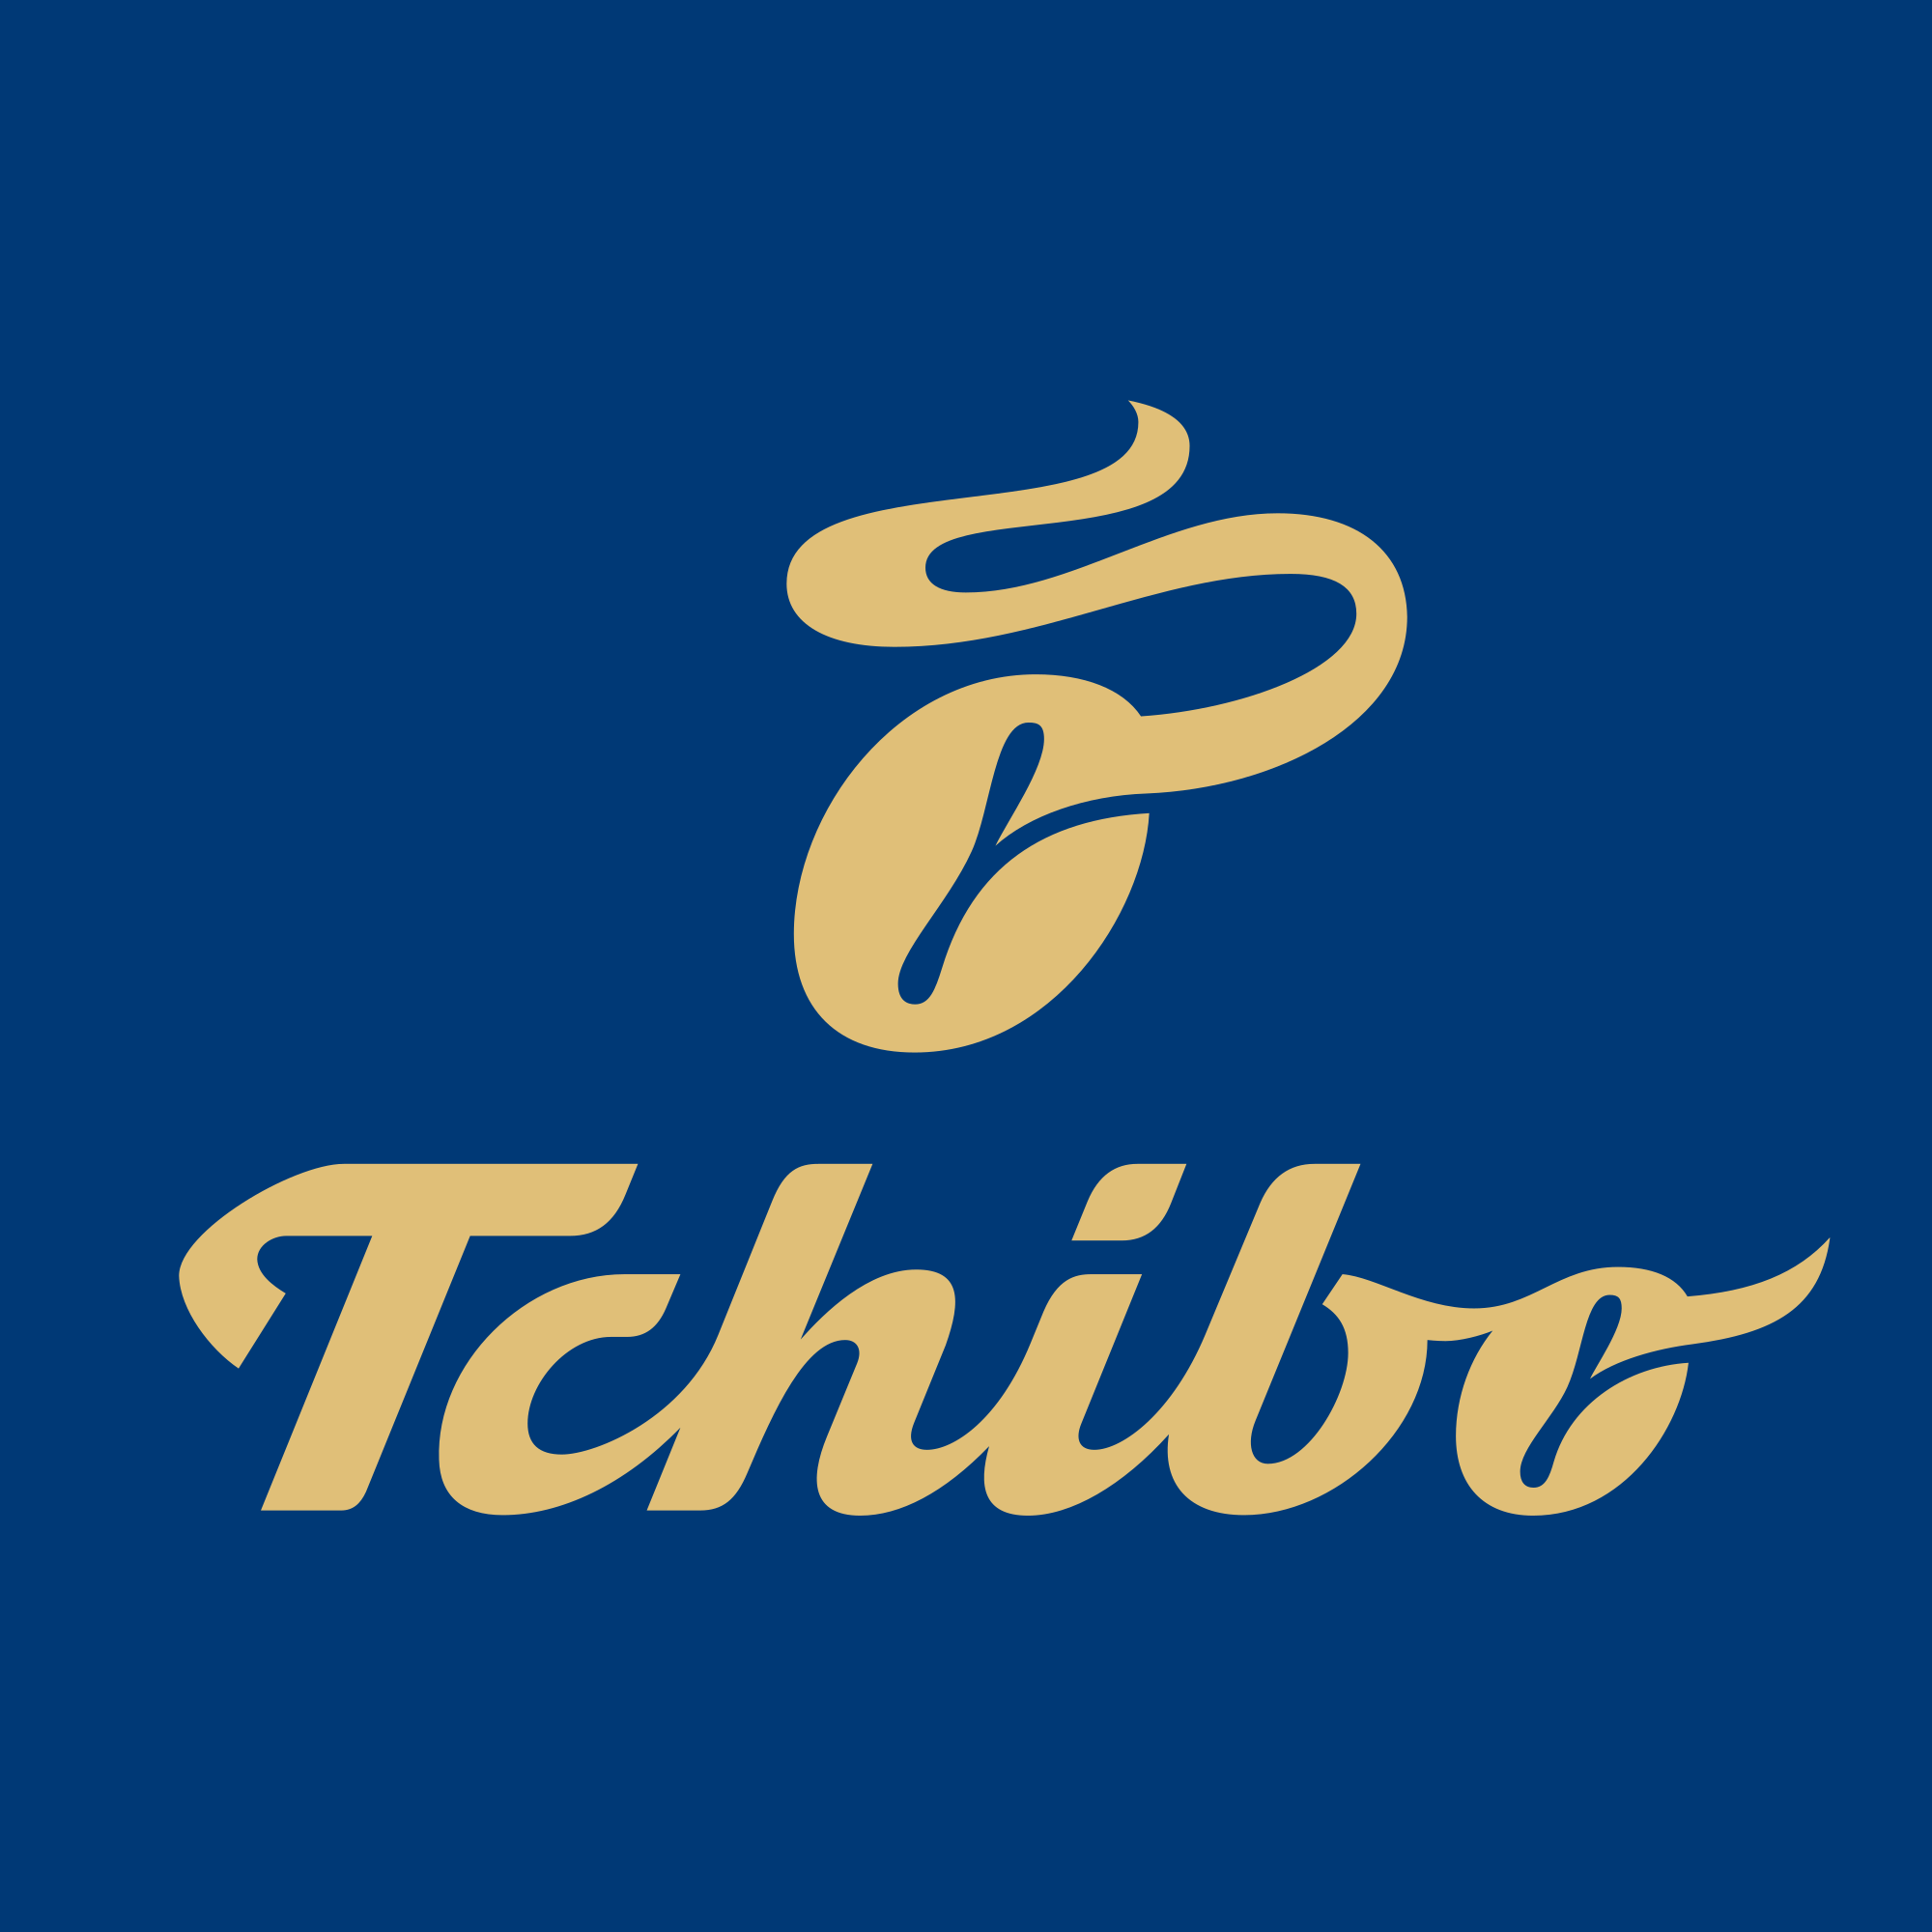 tchibo.png (42 KB)